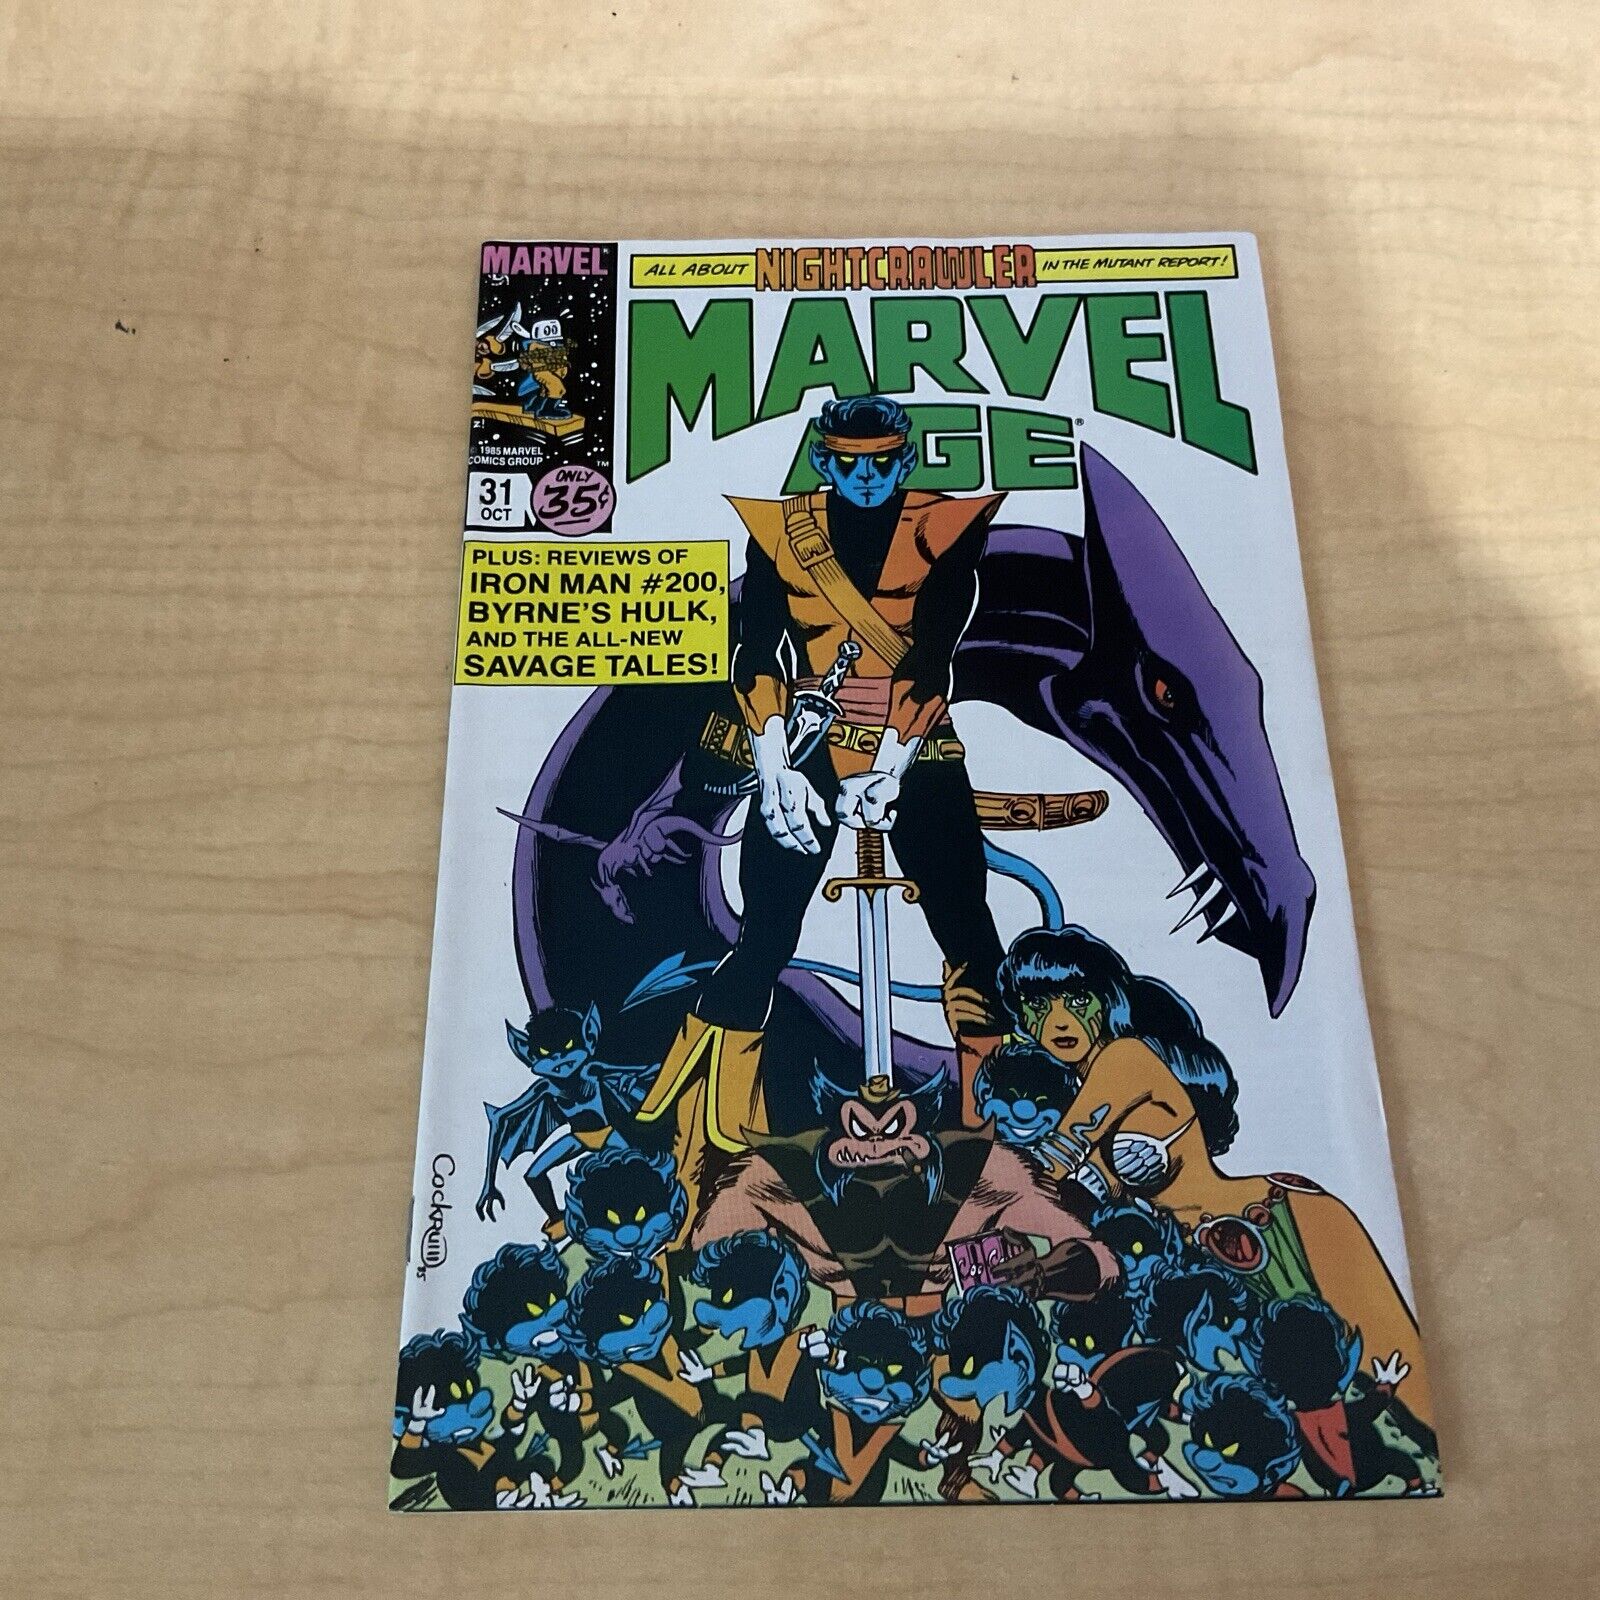 Marvel comics marvel age Vol.1#31 Oct.1985